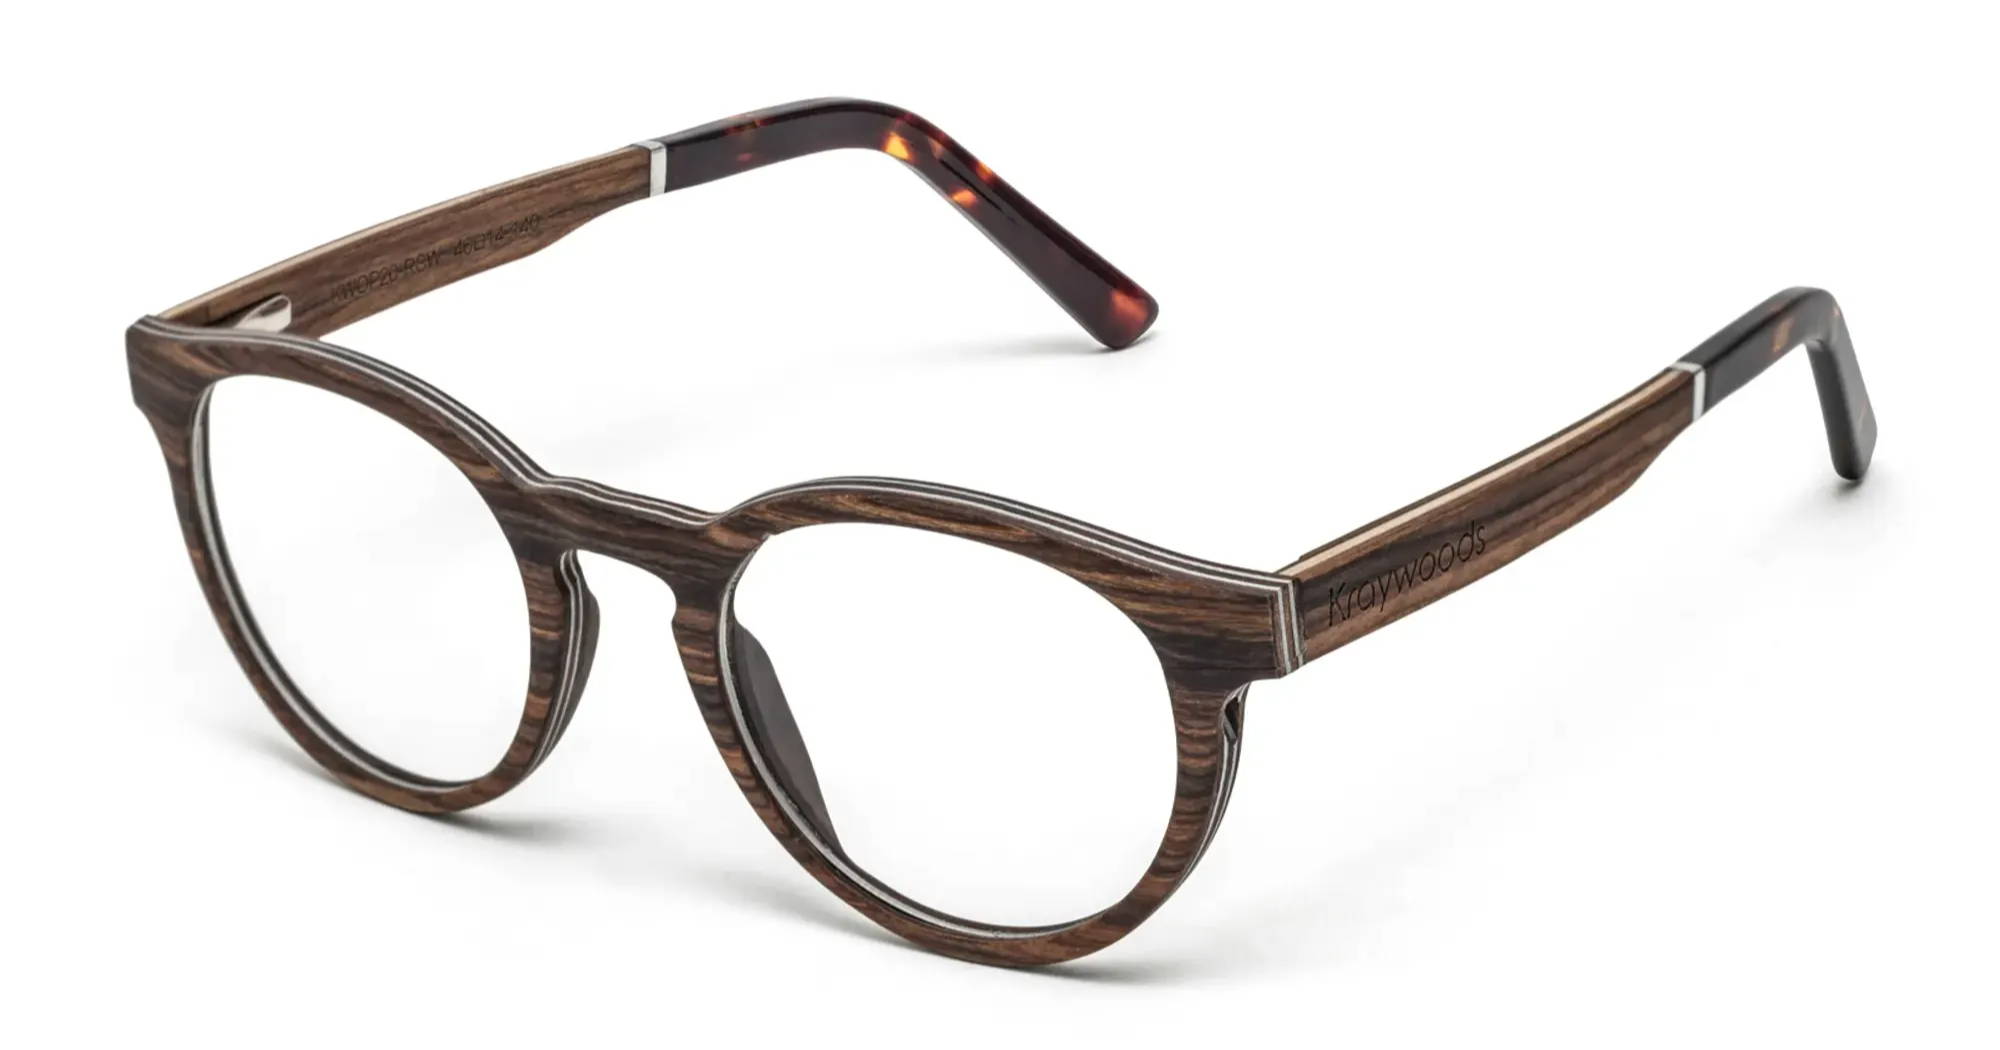 Round wood eyeglasses frame